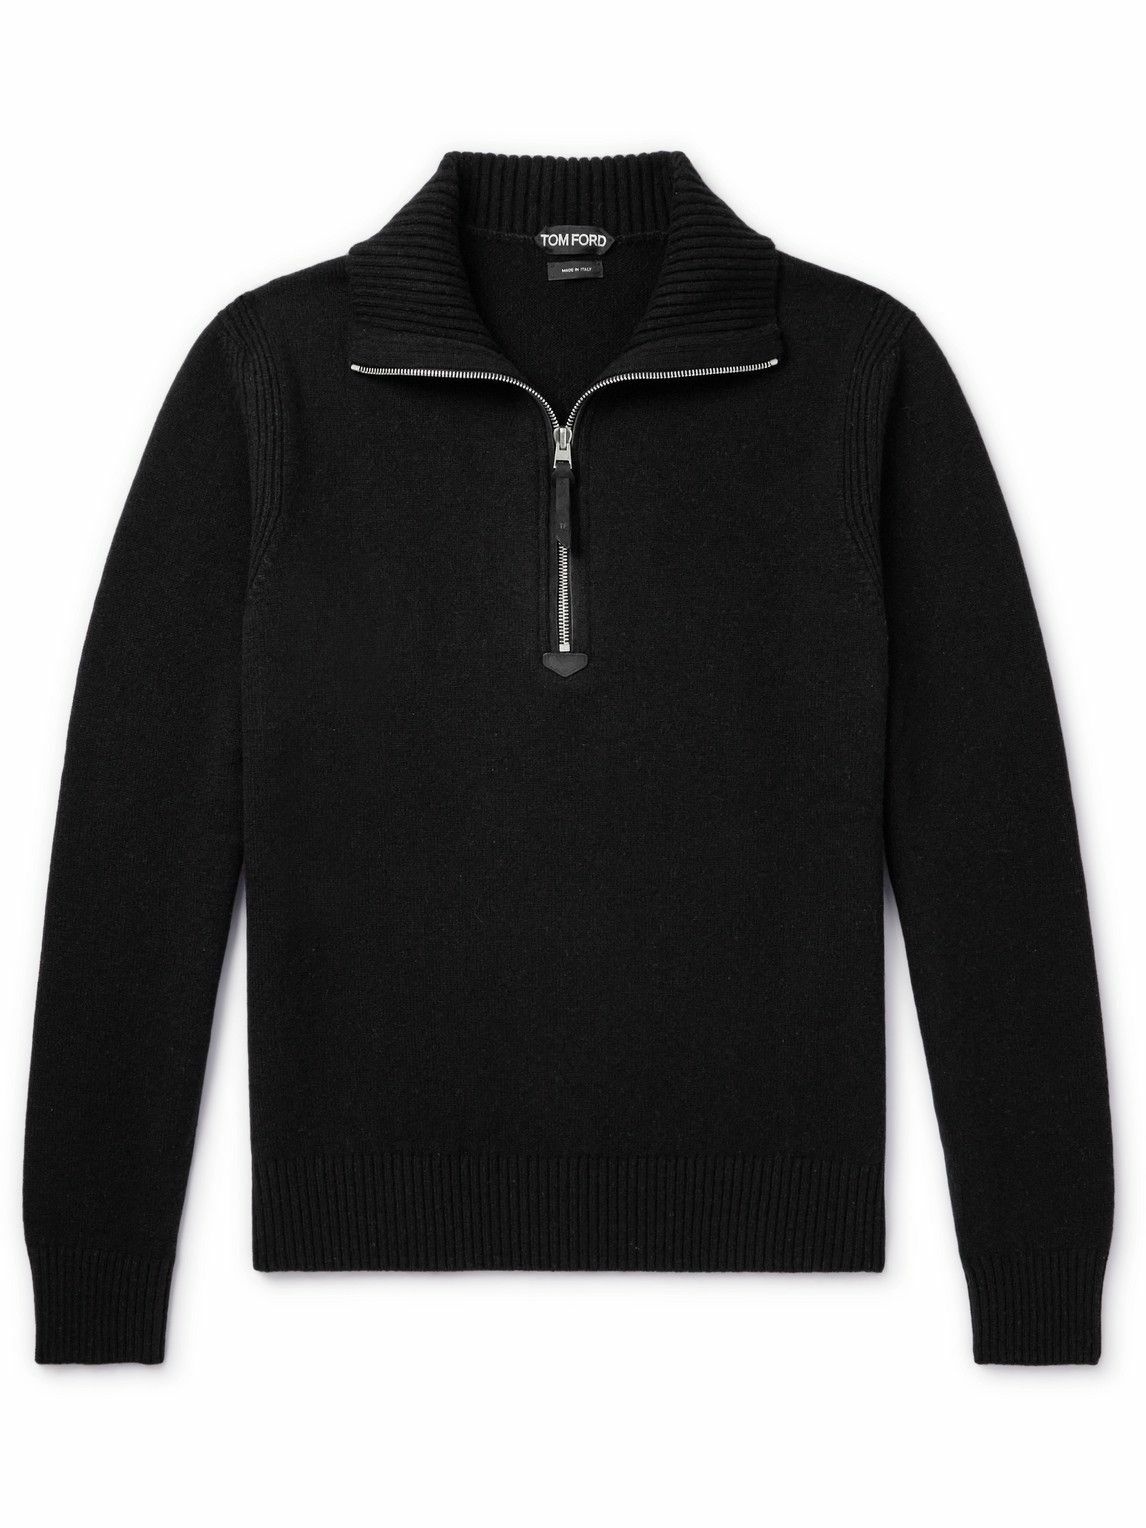 TOM FORD - Suede-Trimmed Wool-Blend Half-Zip Sweater - Black TOM FORD